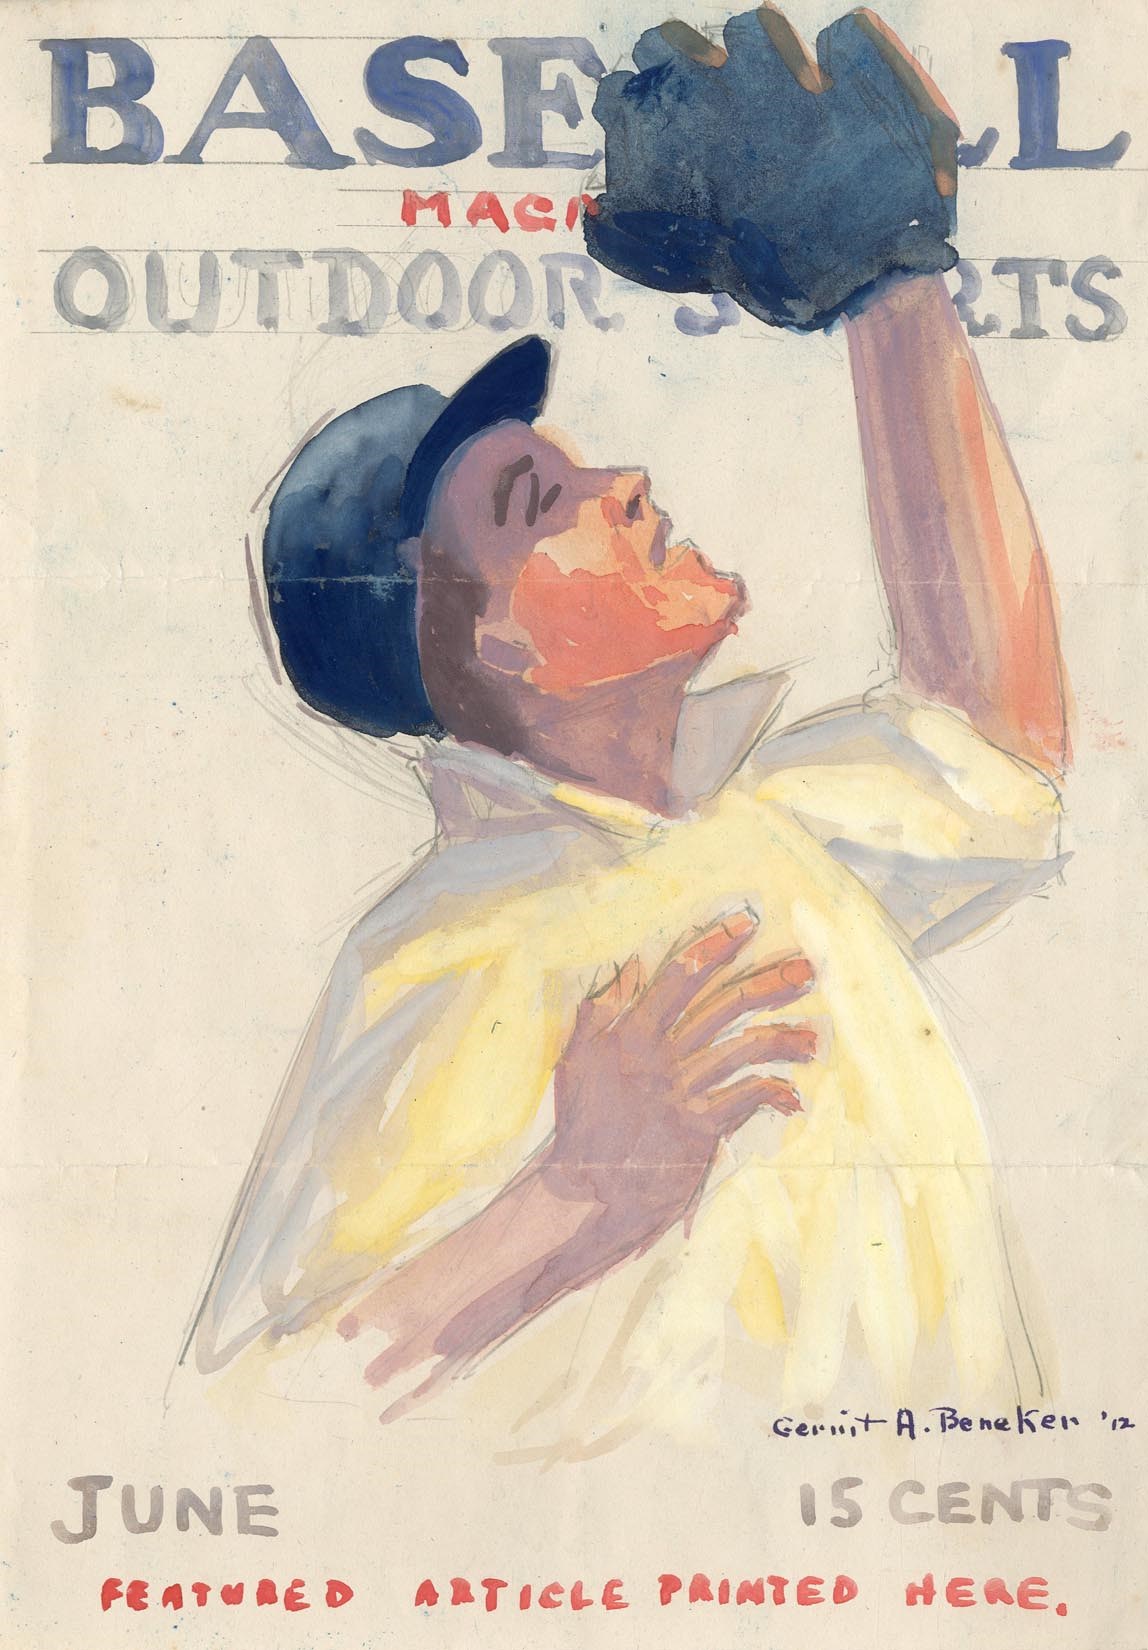 The Baseball Magazine Original Art - June 1912 "Baseball Magazine" Cover Art Study by Gerrit Beneker (1882-1934)